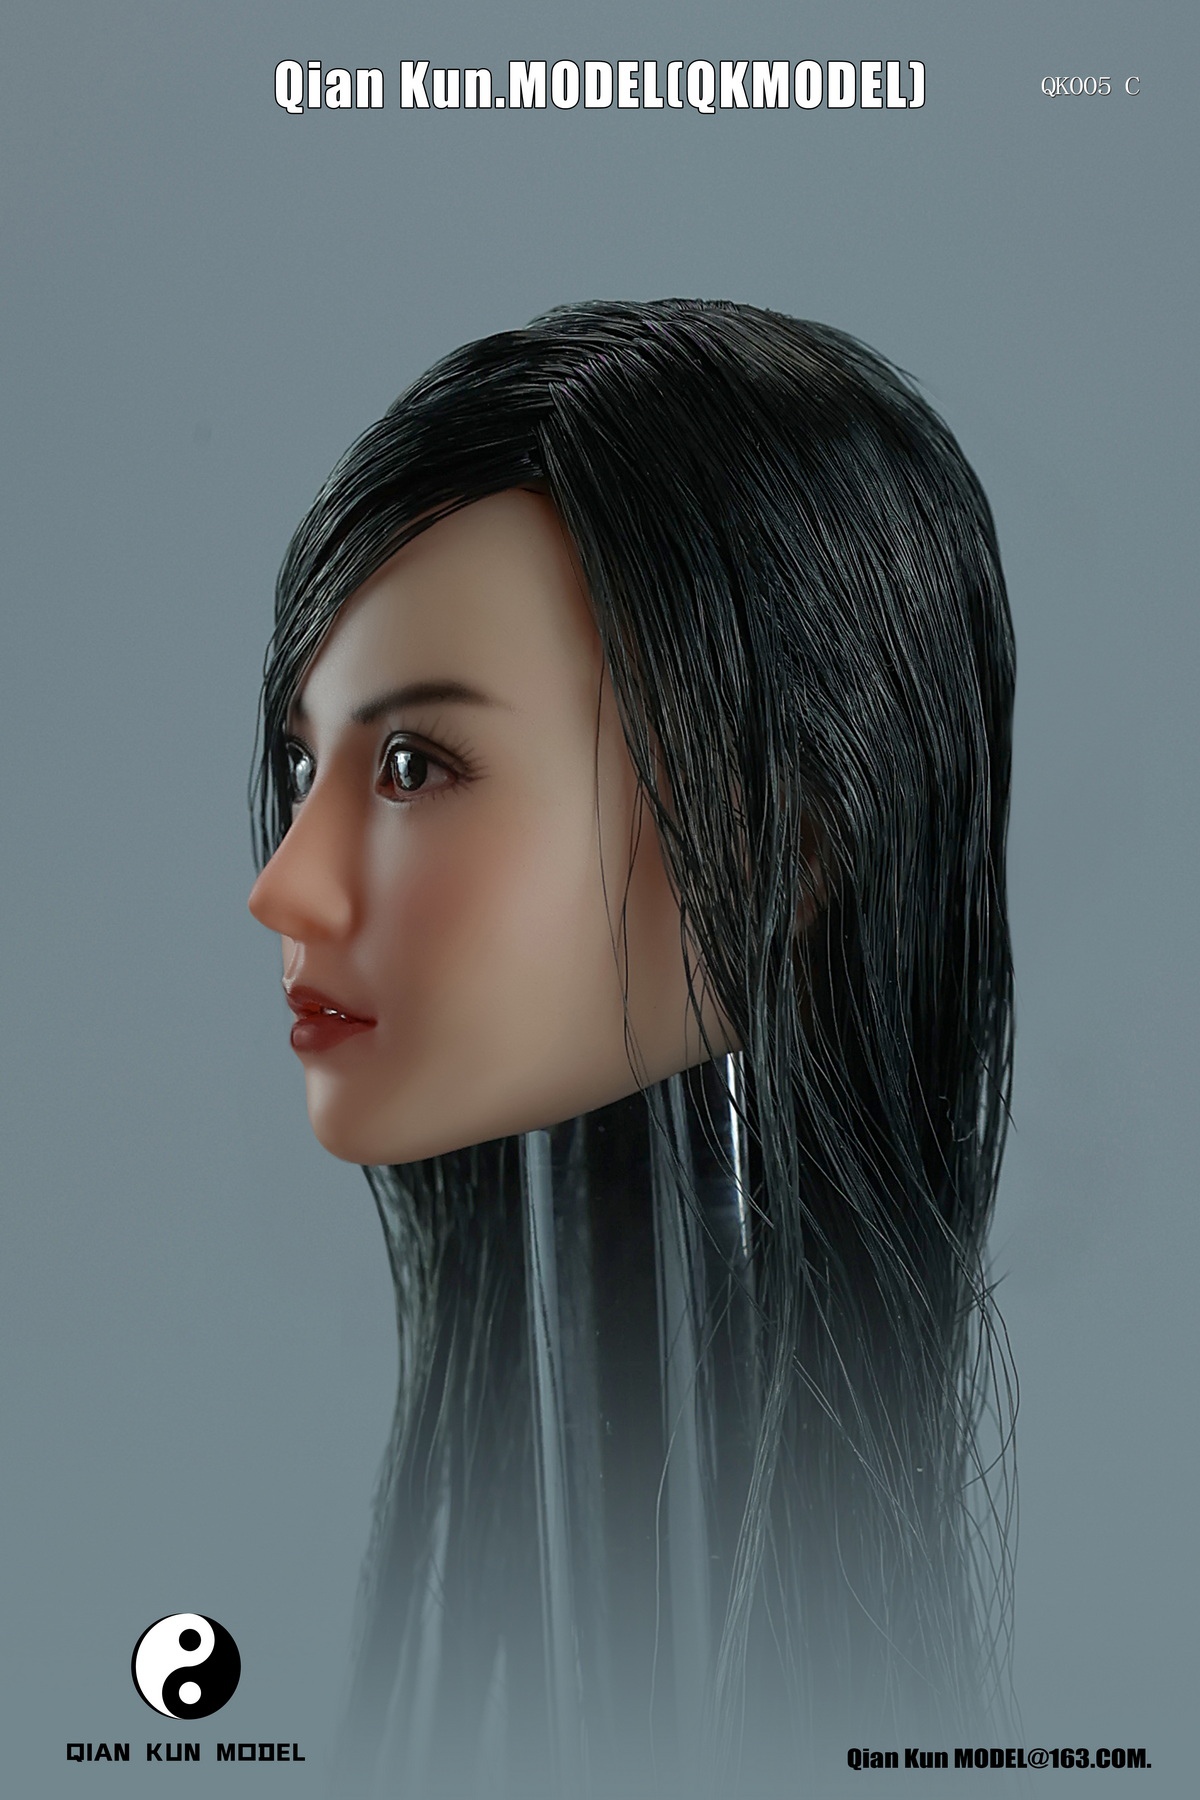 Asian - NEW PRODUCT: Qian Kun.Model - Sweet Asian Female Head Sculpture (QK005-A/B/C) 14156